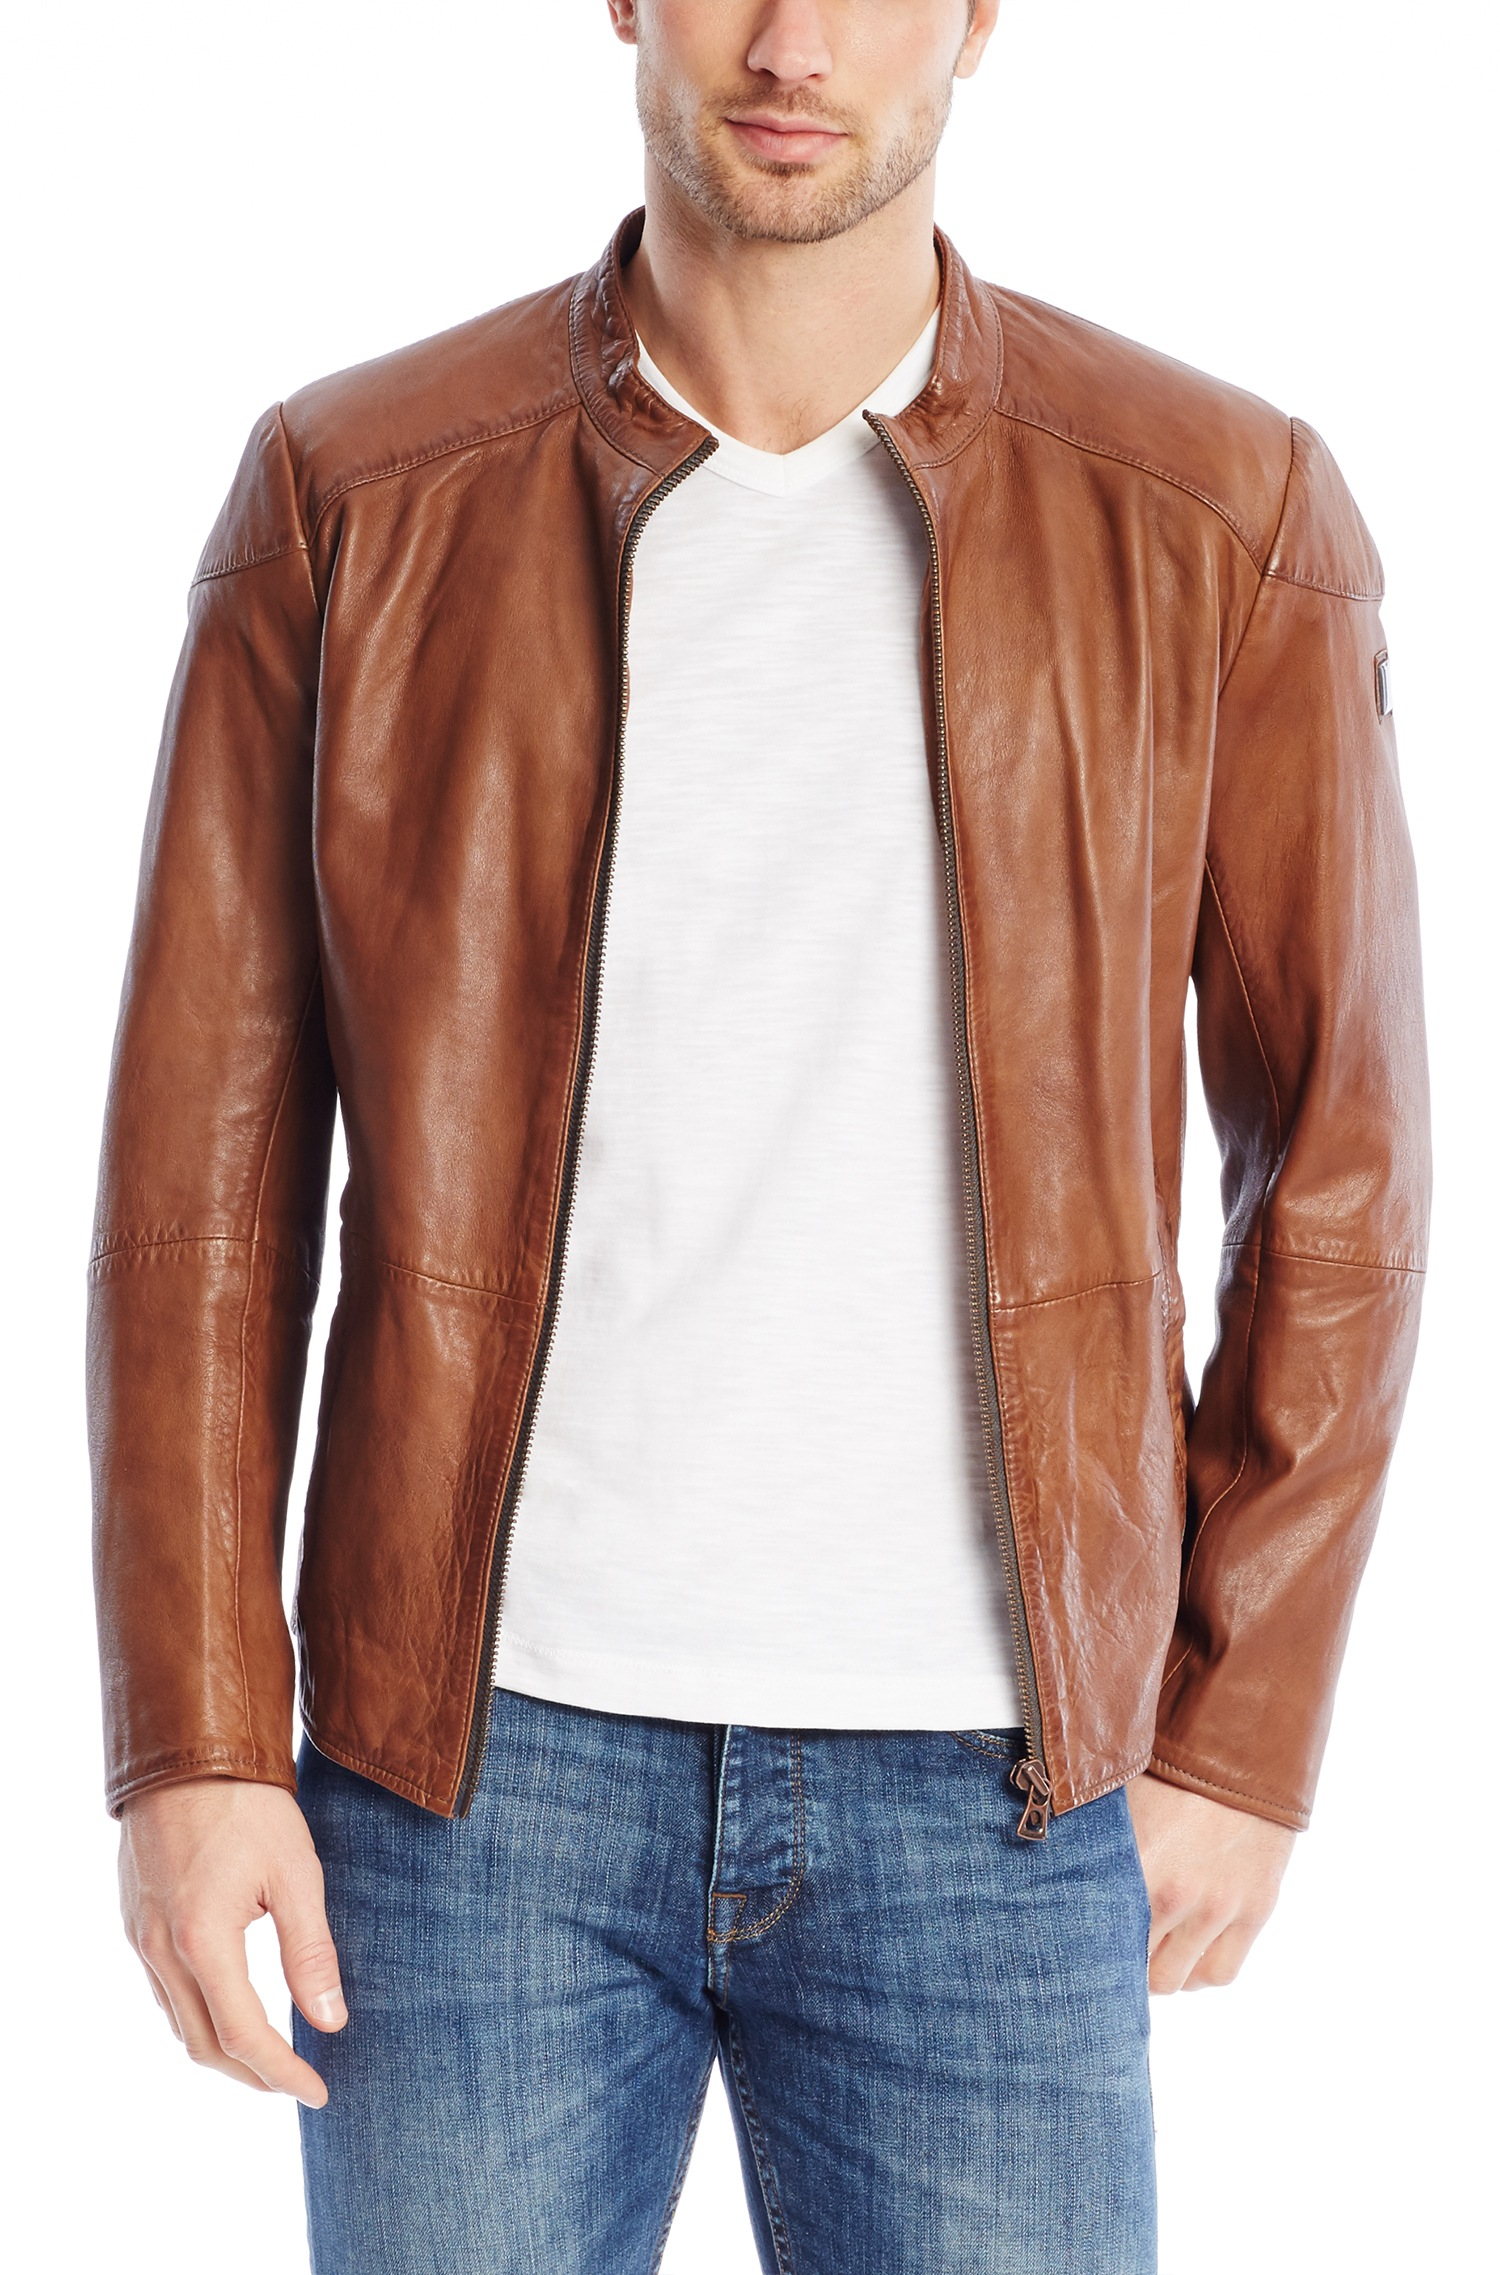 Hugo Boss Tan Leather Jacket Deals, 60% OFF | www.colegiogamarra.com